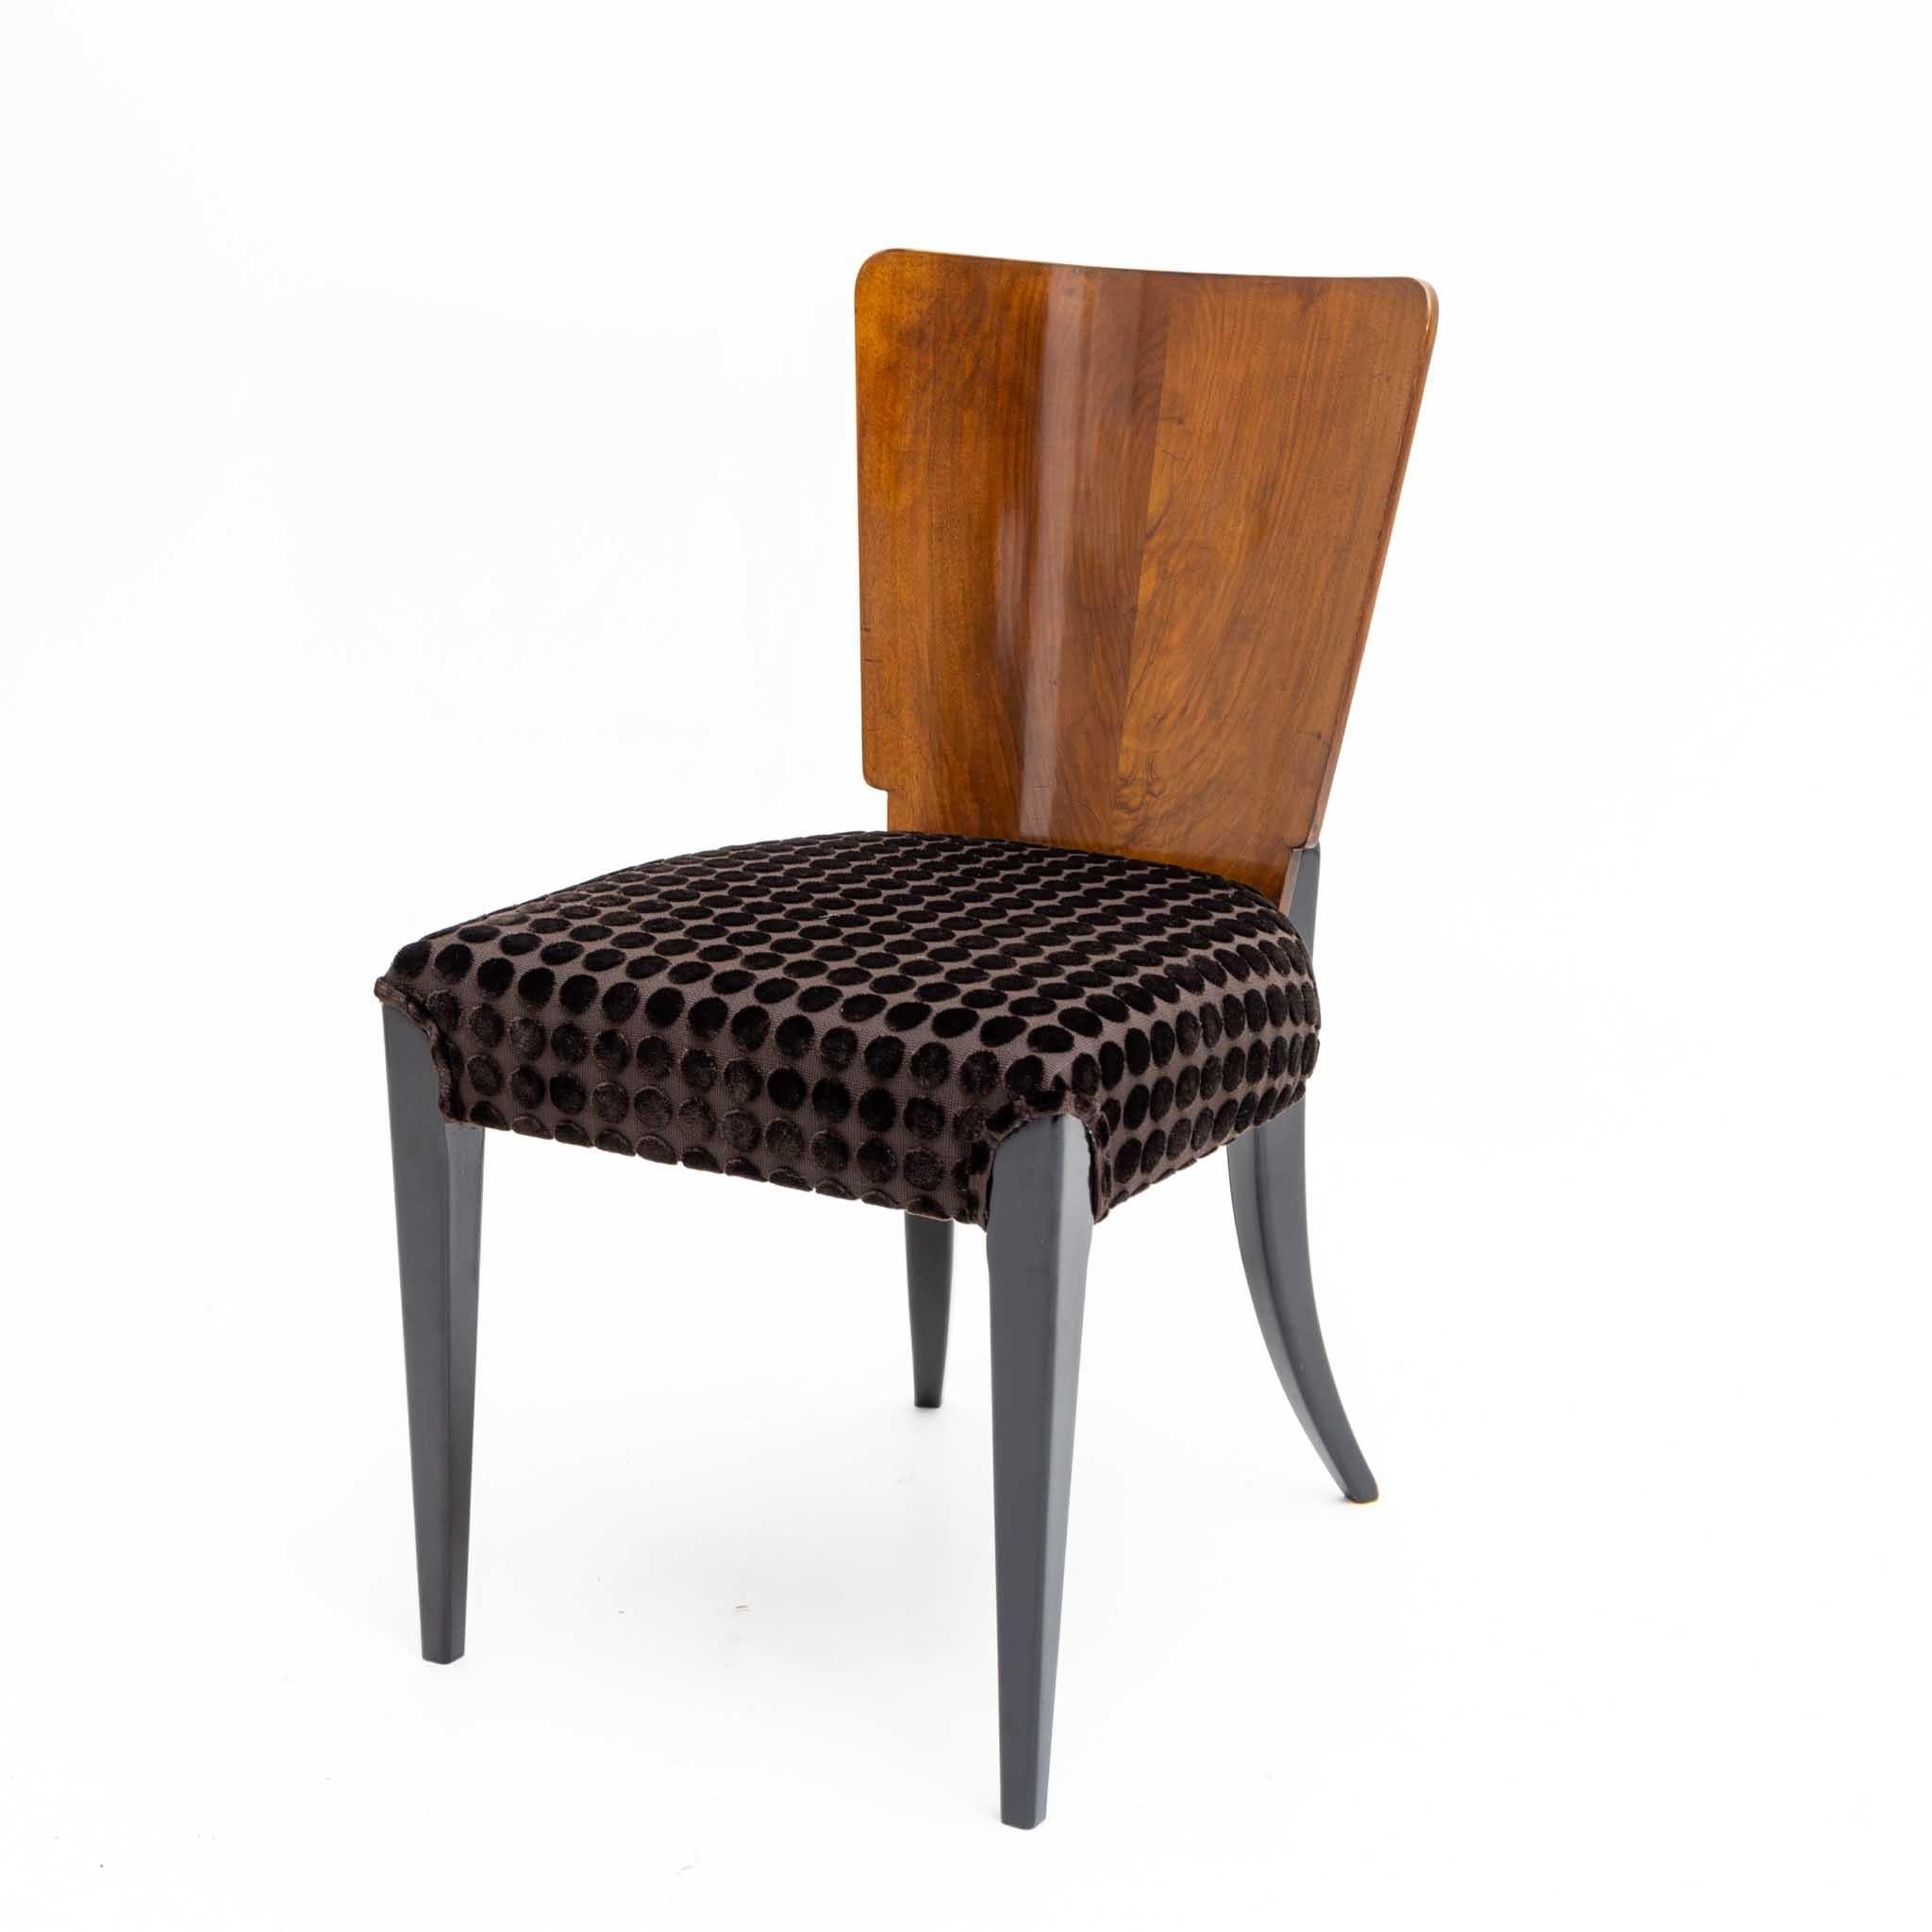 Mid-20th Century Jindrich Halabala Chairs, Czechoslovakia, 1930s For Sale